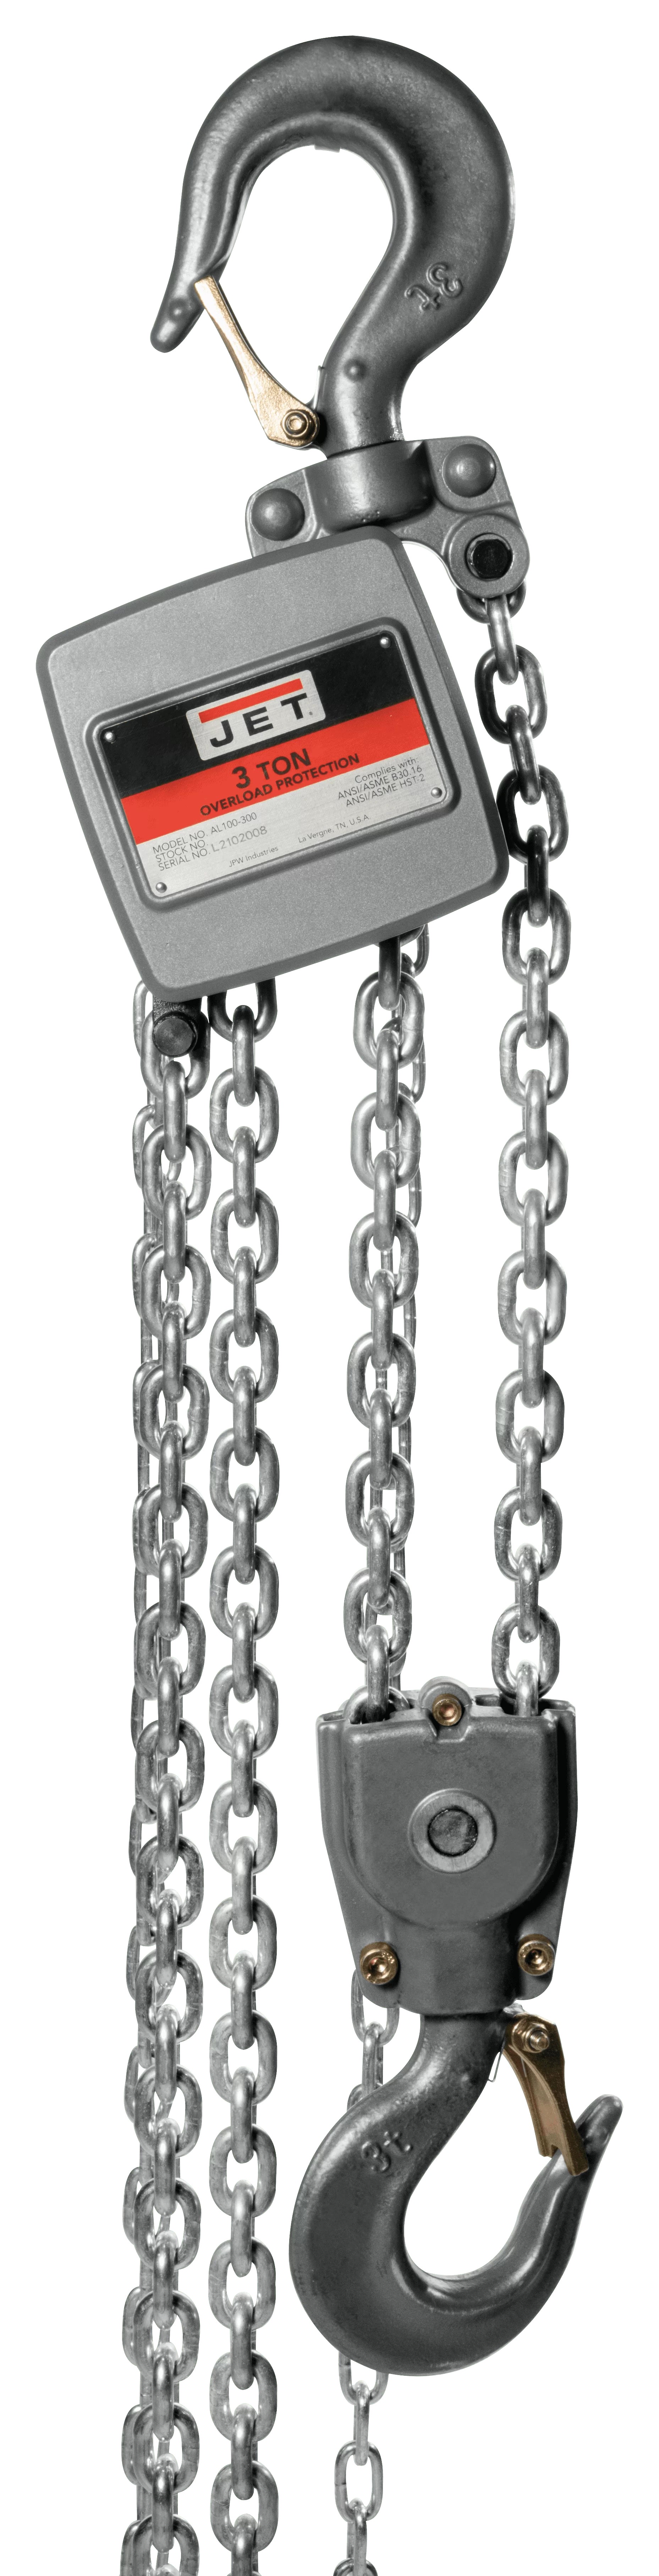 AL100-300-10 3 Ton Aluminum Hand Chain Hoist with 10ft of Lift